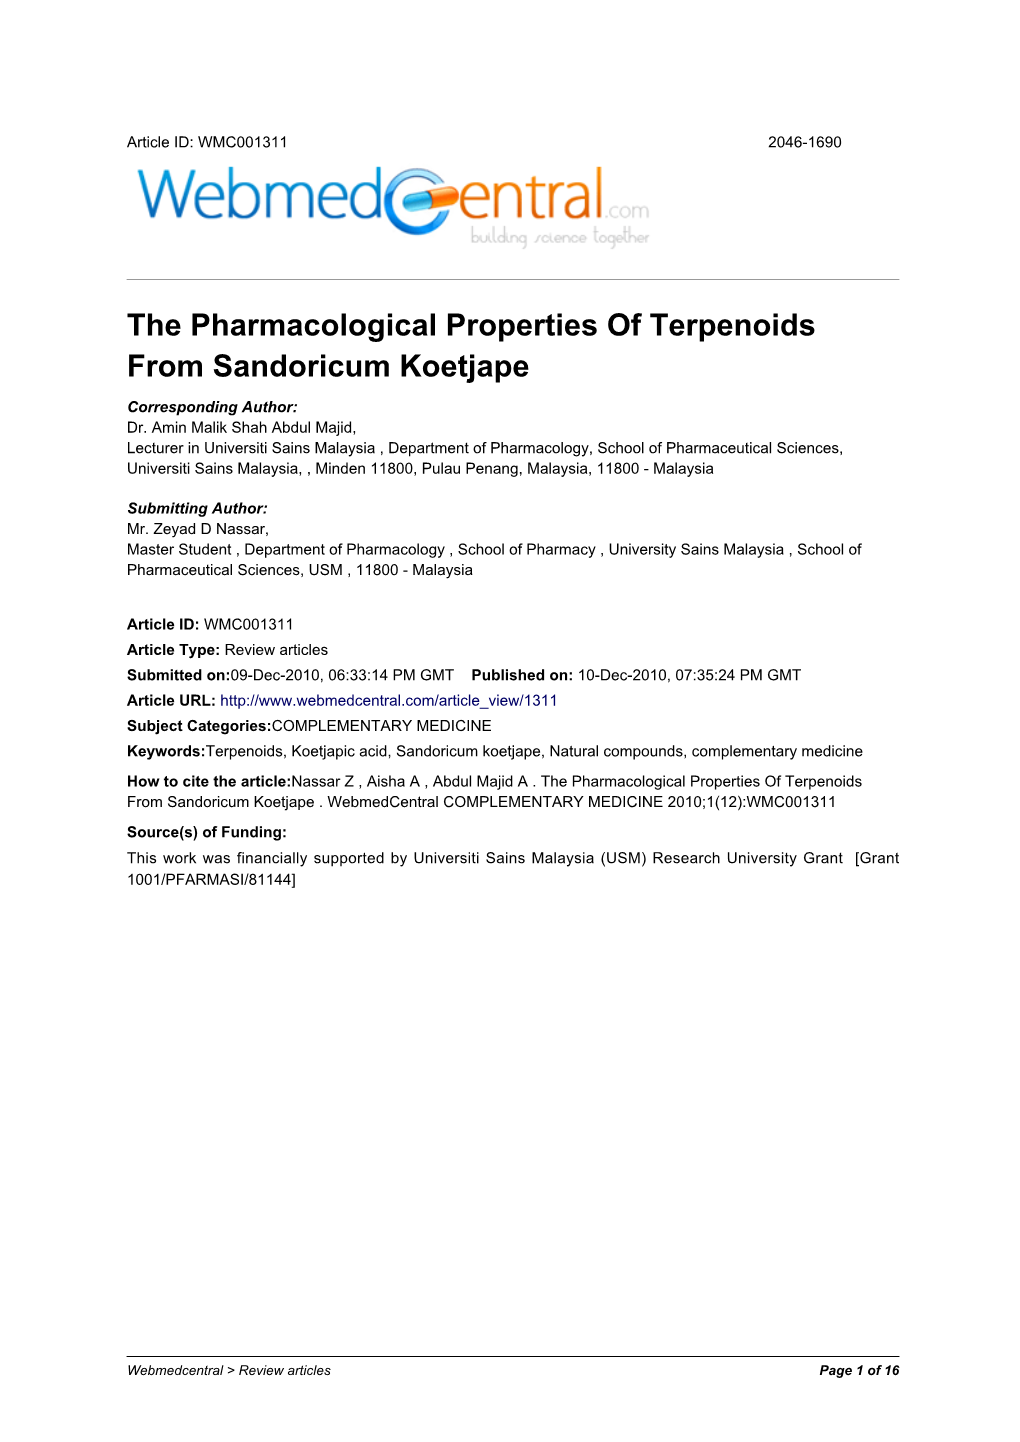 The Pharmacological Properties of Terpenoids from Sandoricum Koetjape